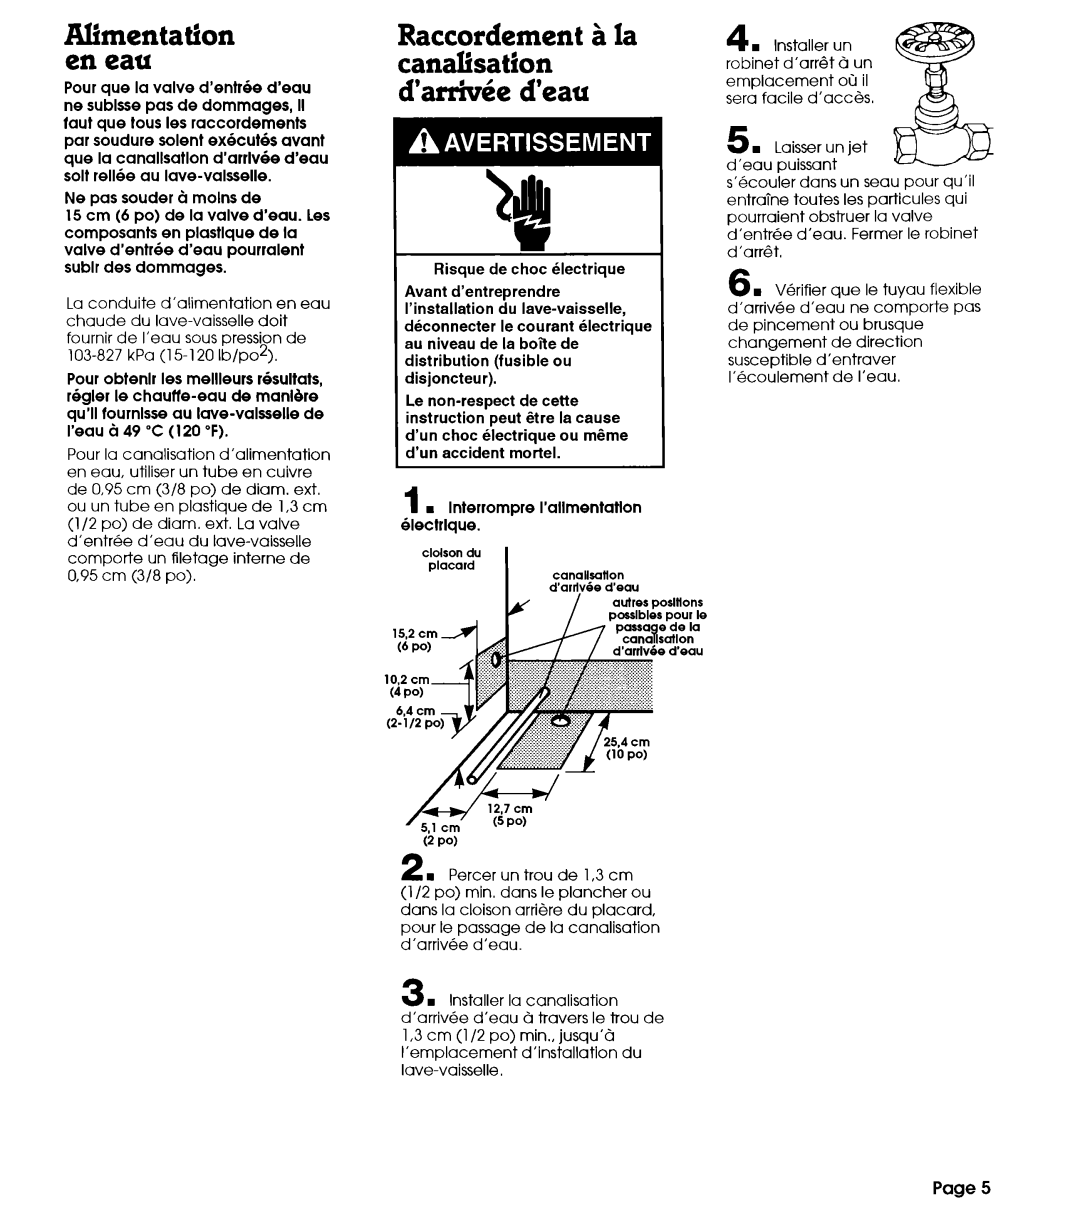 Whirlpool 801 installation instructions Raccordement 5 la canalisatfon d’arrhie d’eau, AlSmentation en eau 